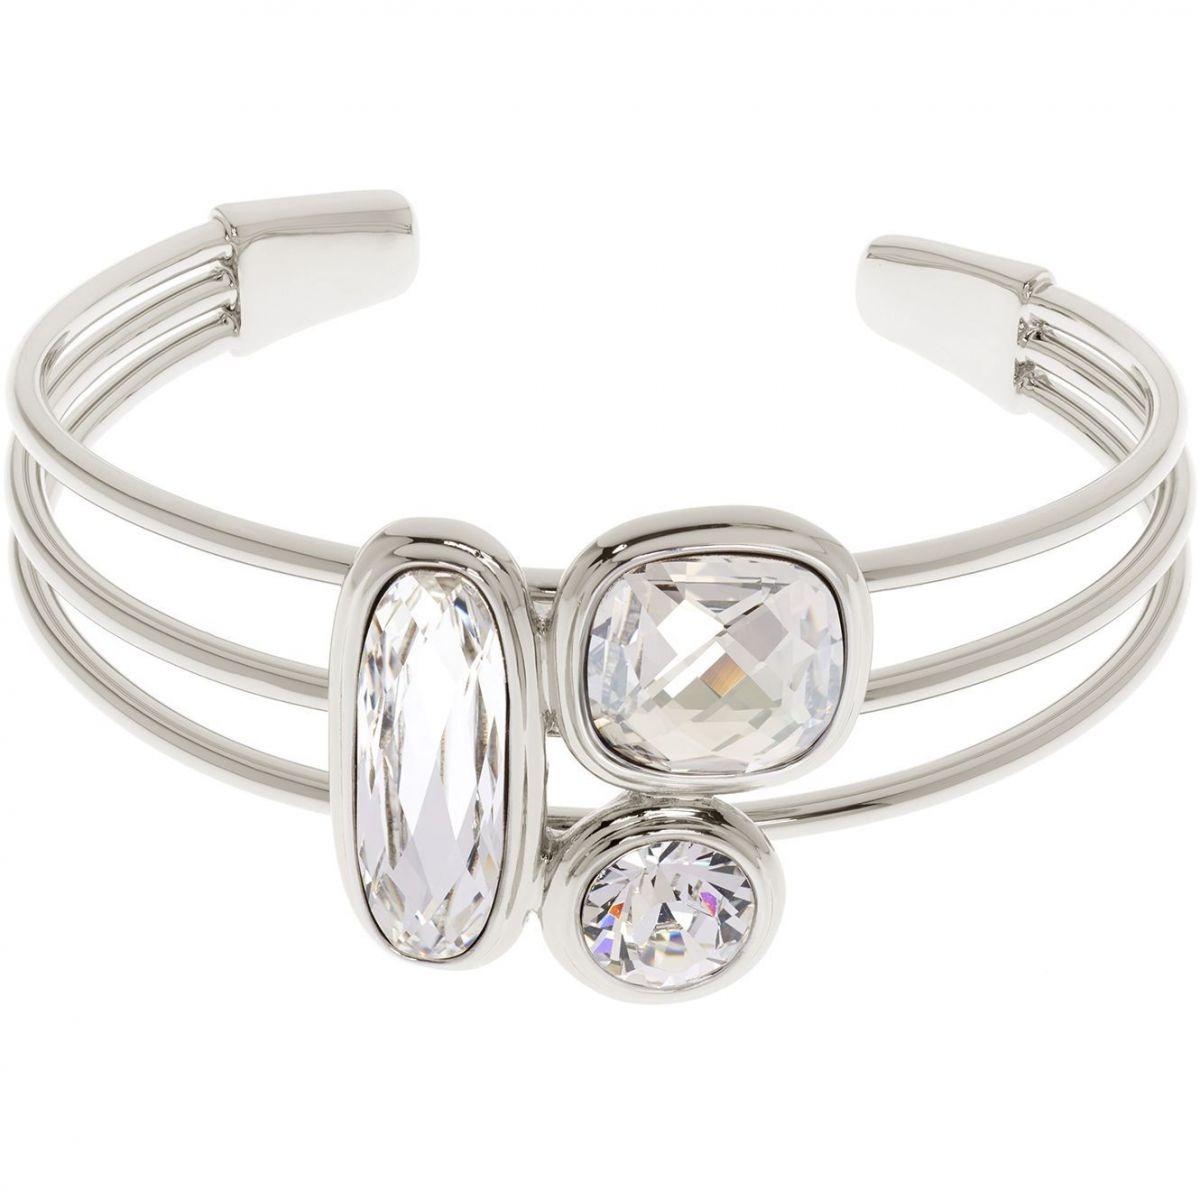 Watch Shop - Bangles in Silver for Woman from Karen Millen GOOFASH